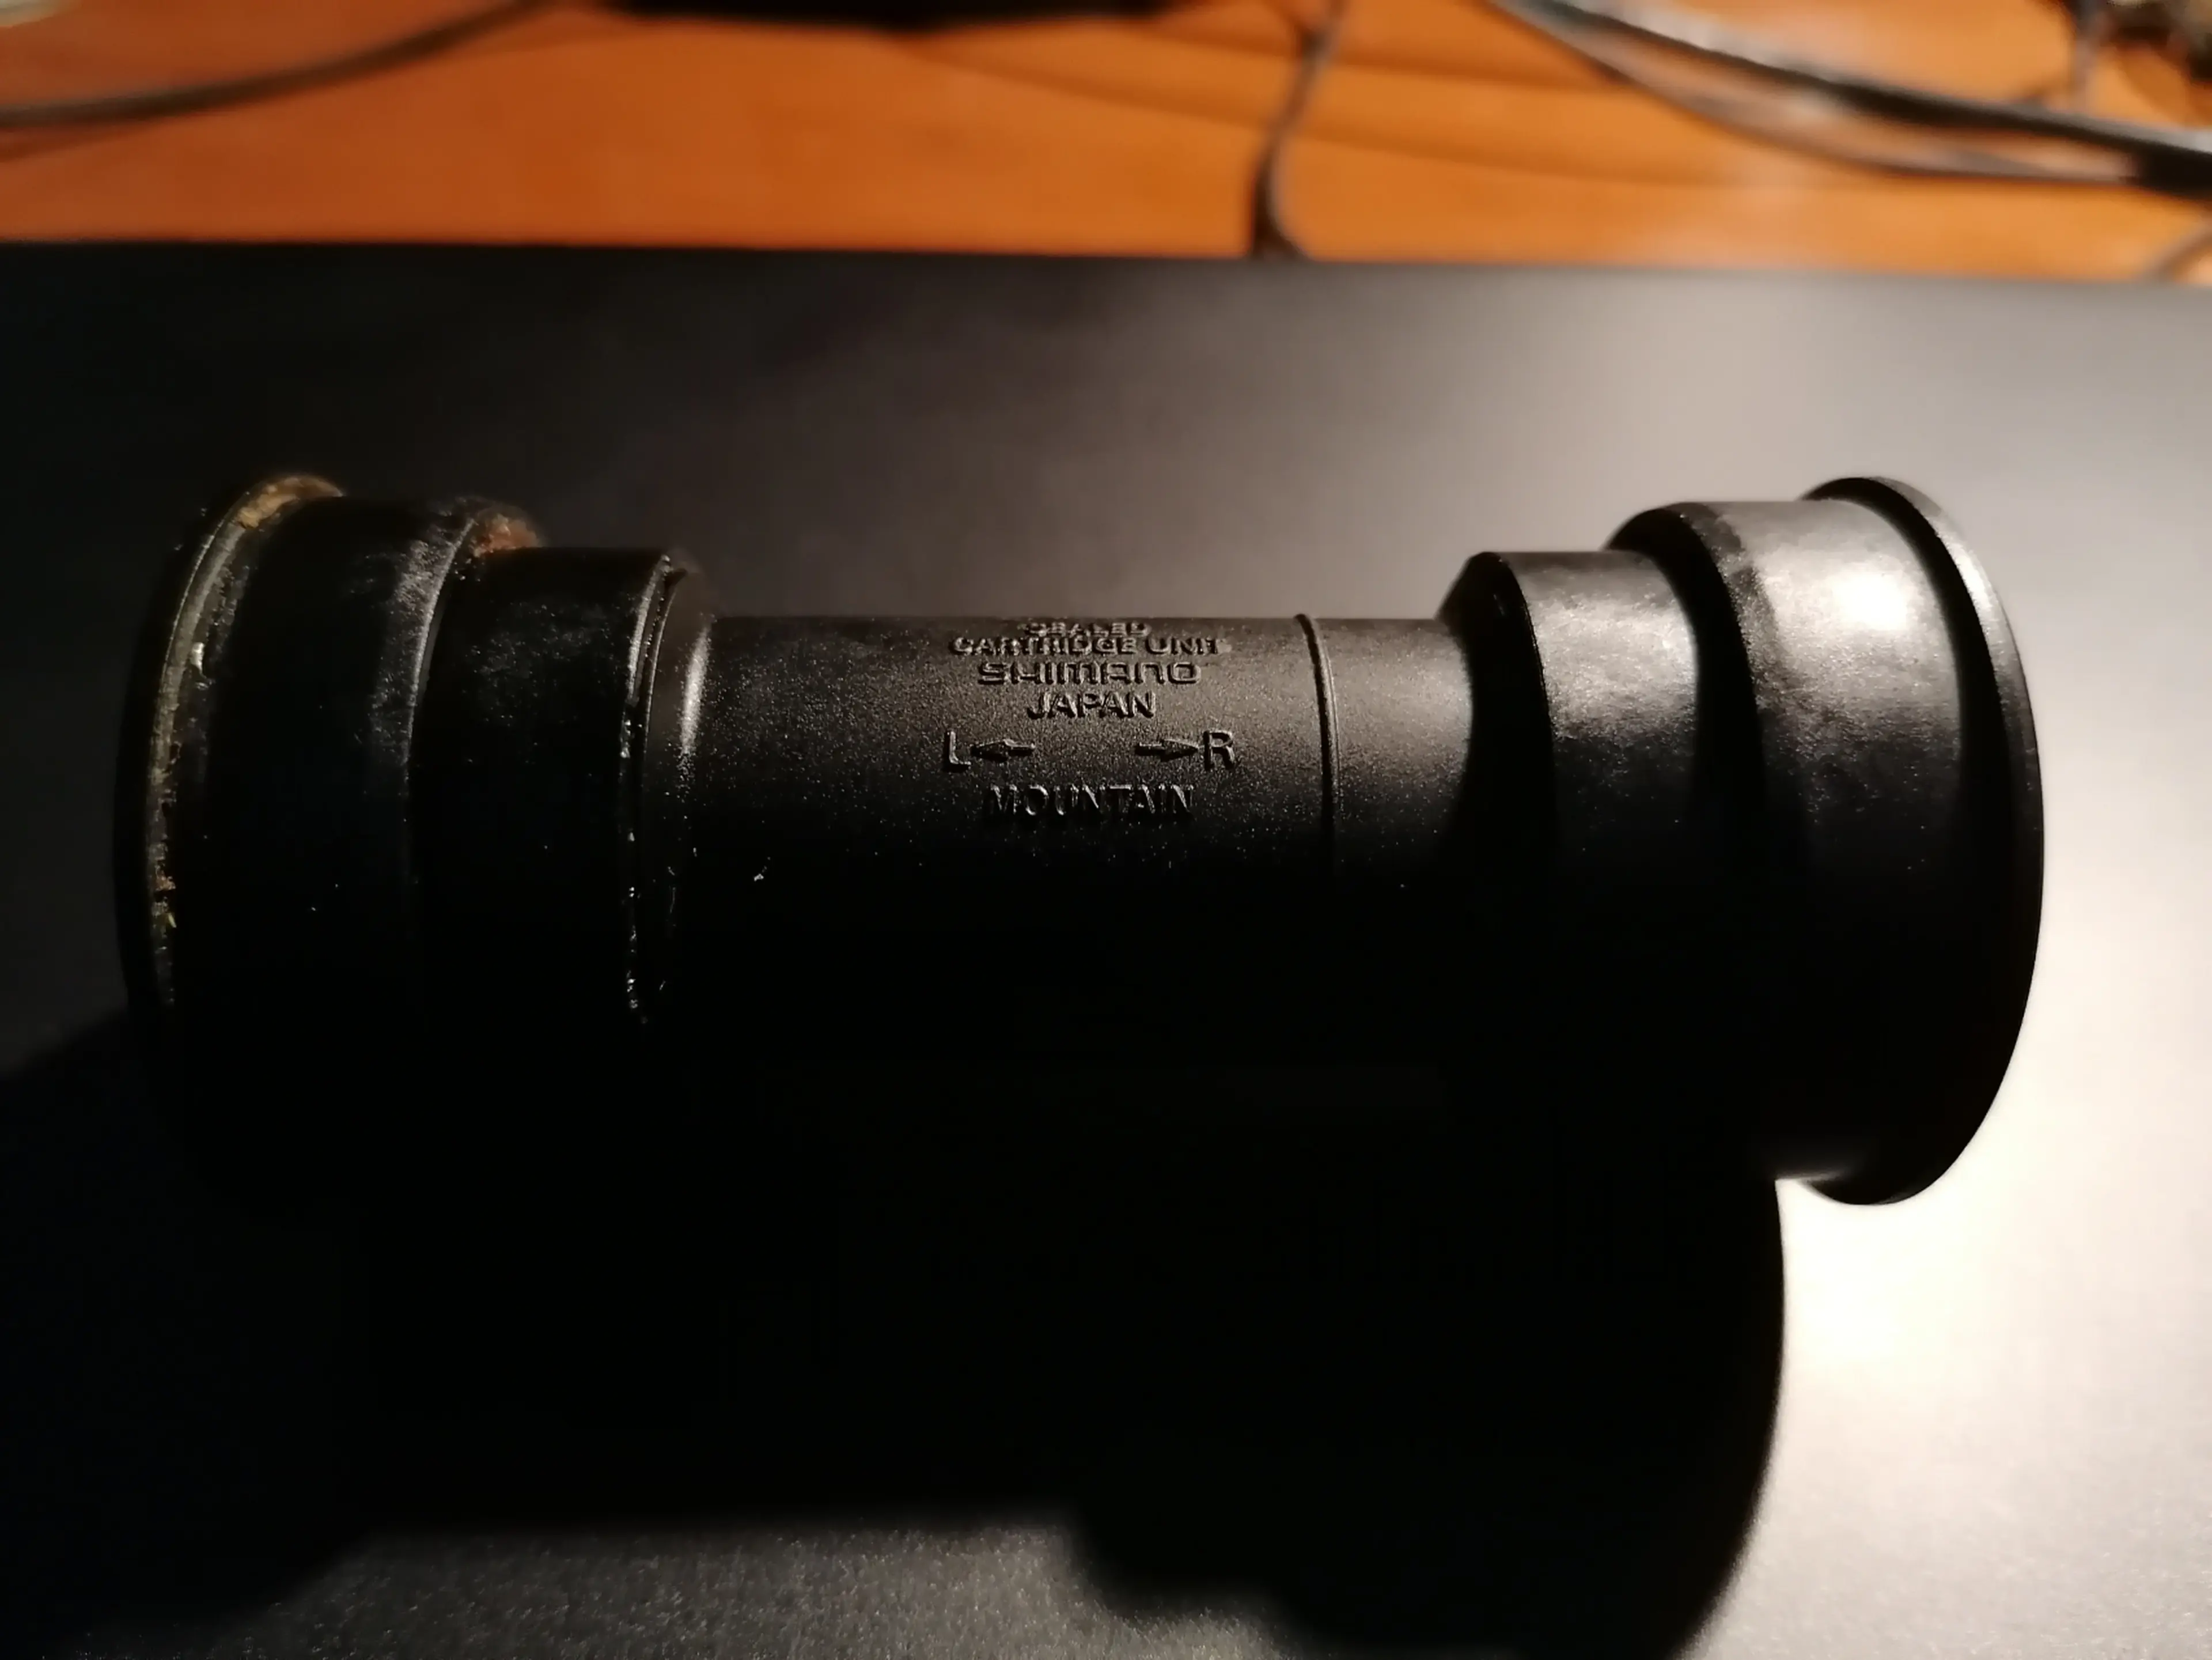 1. Monobloc press fit Shimano XTR BB91-41 89.5/92mm